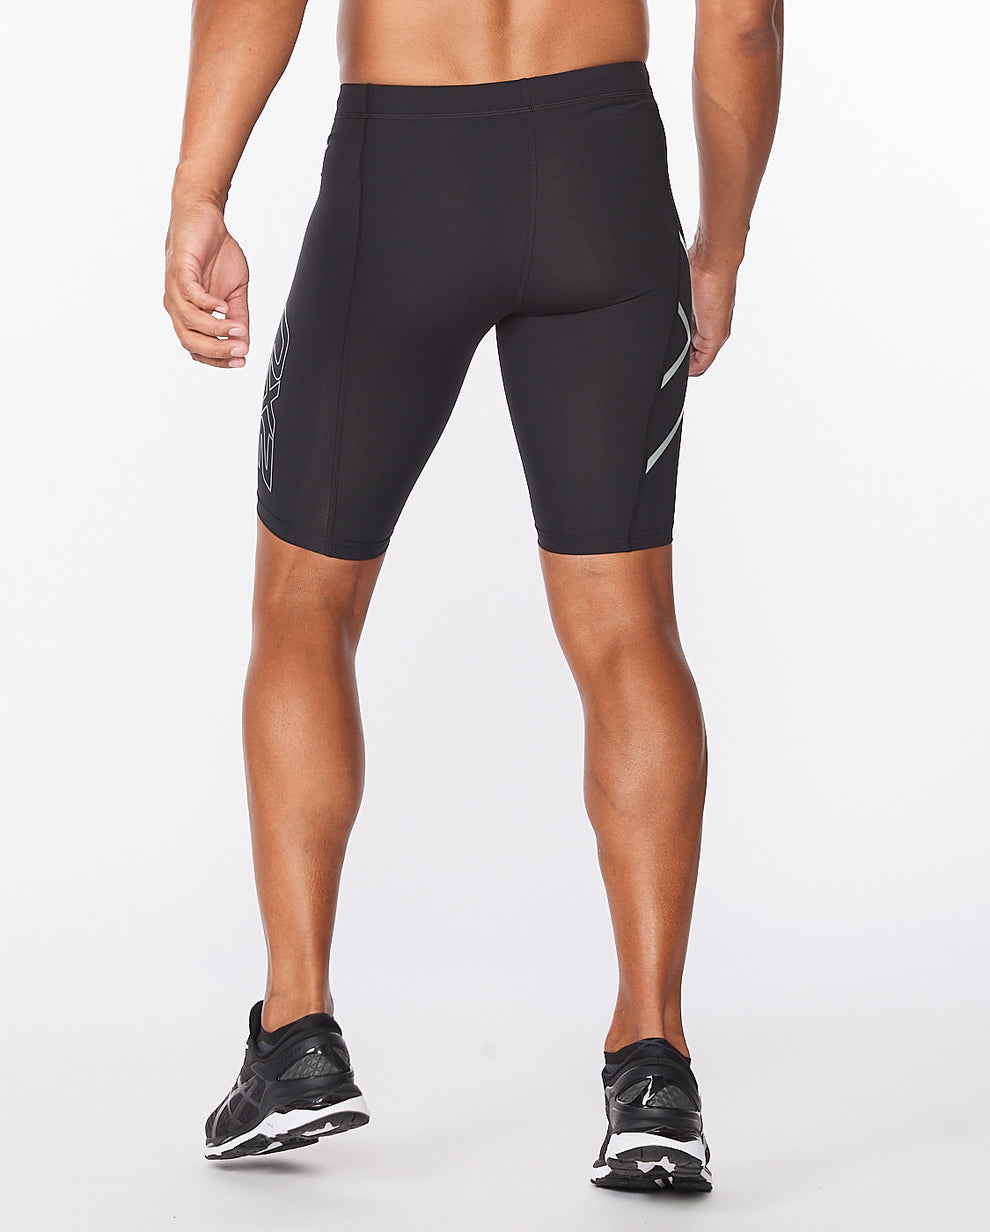 2XU Core Compression Men's Cycling Shorts (Black/Silver)